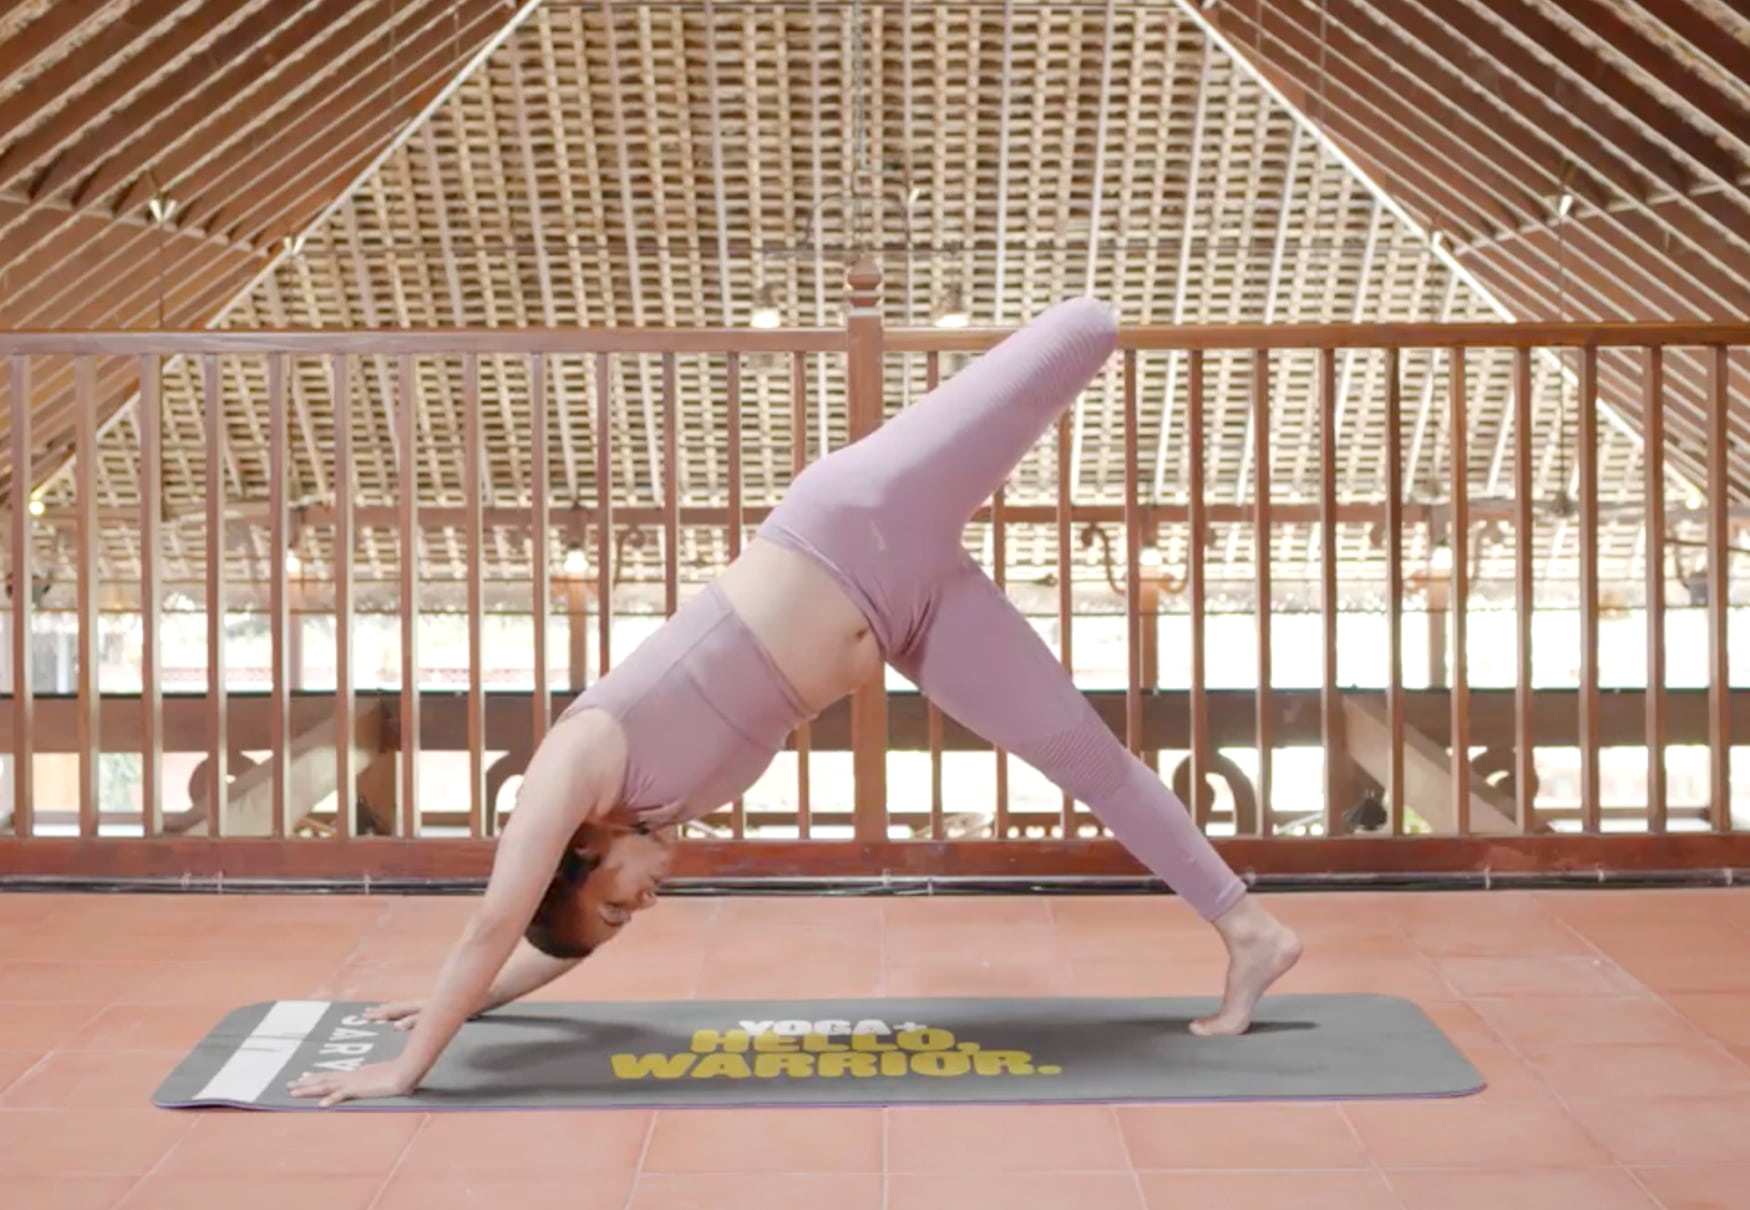 Bikram Yoga Poses Video | International Society of Precision Agriculture